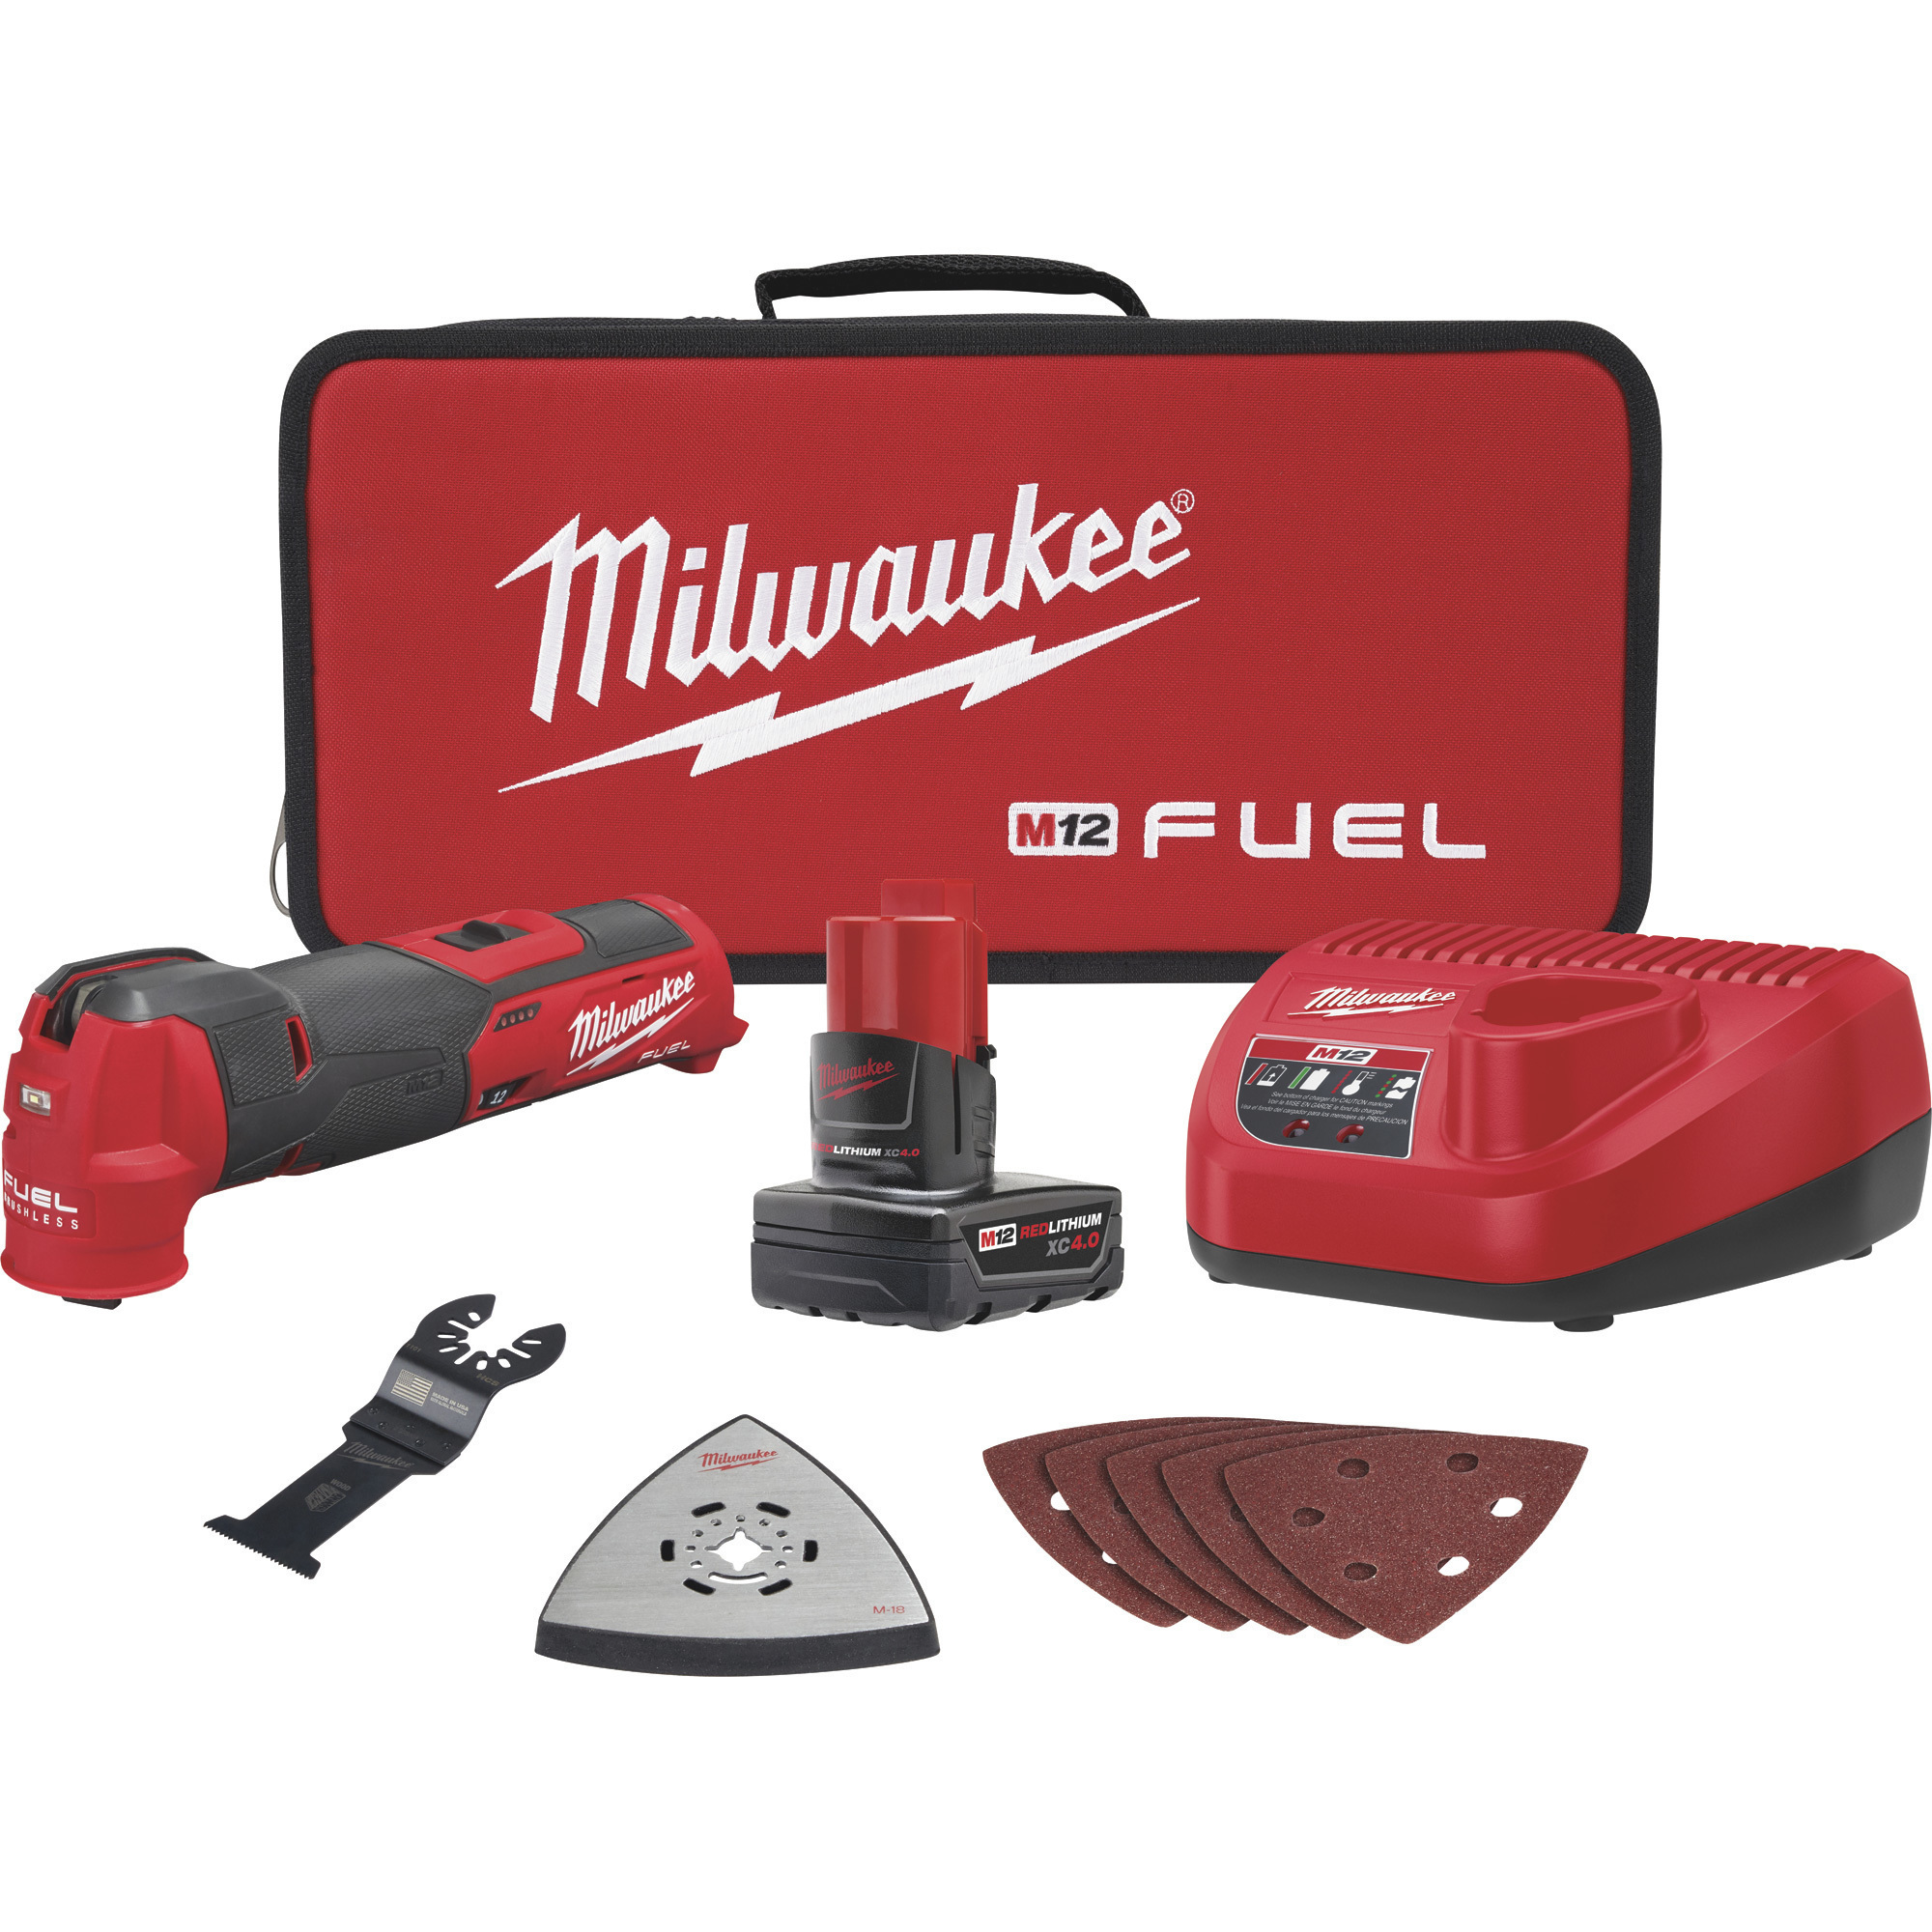 Milwaukee M12 FUEL Oscillating Multi-Tool Kit, 1 Battery, Model 2526-21XC